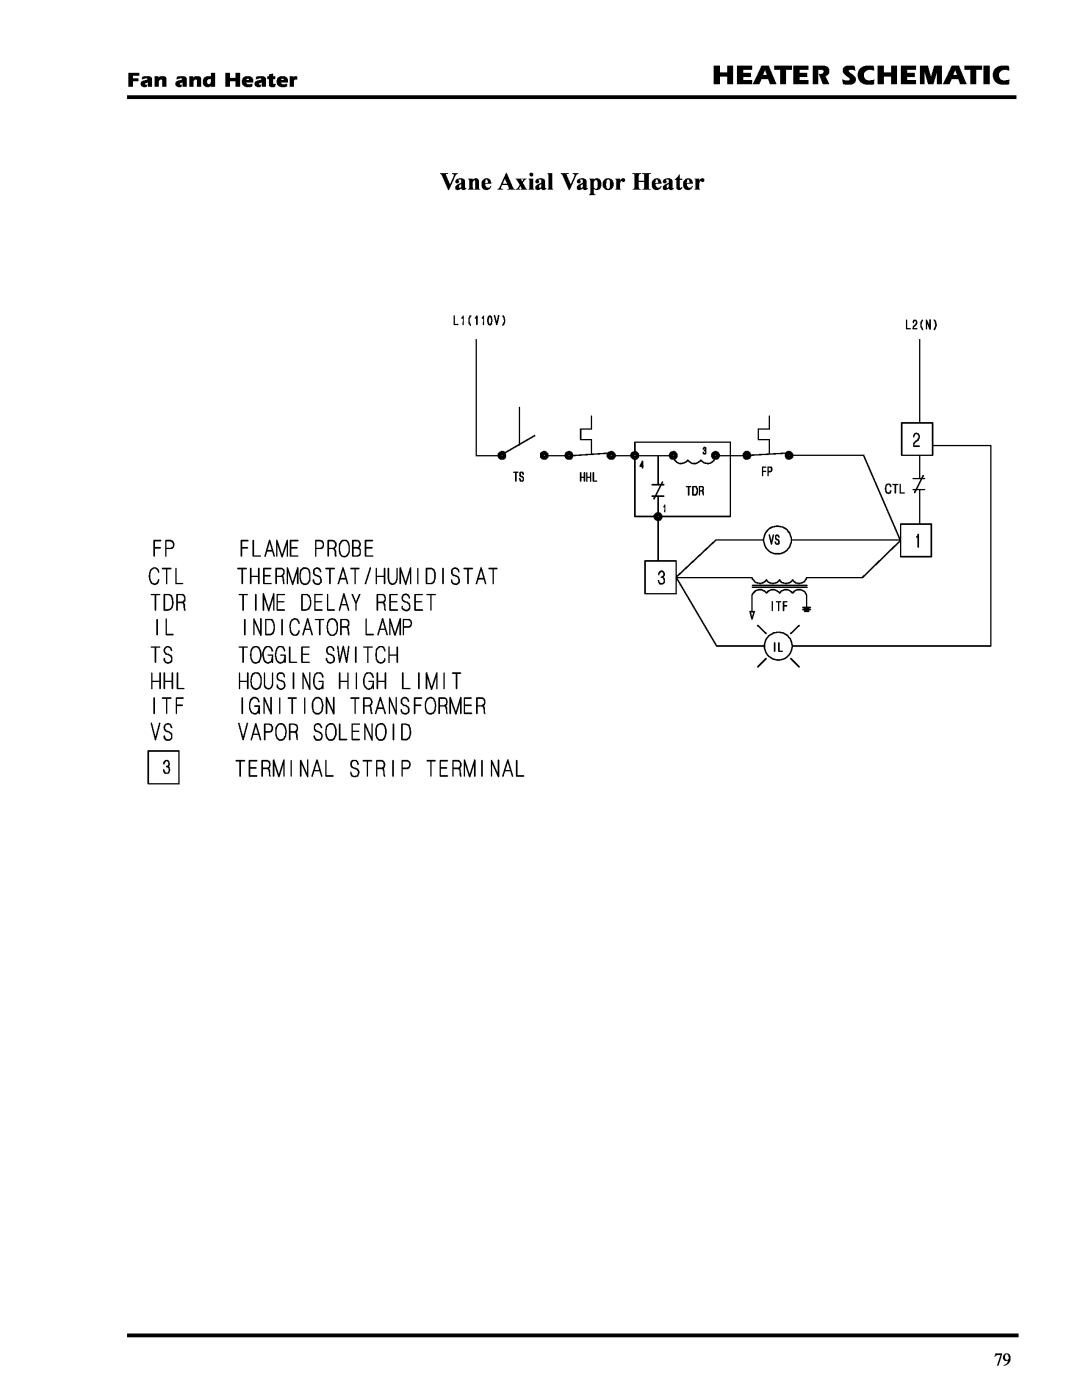 GSI Outdoors PNEG-377 service manual Vane Axial Vapor Heater, Heater Schematic, Fan and Heater 